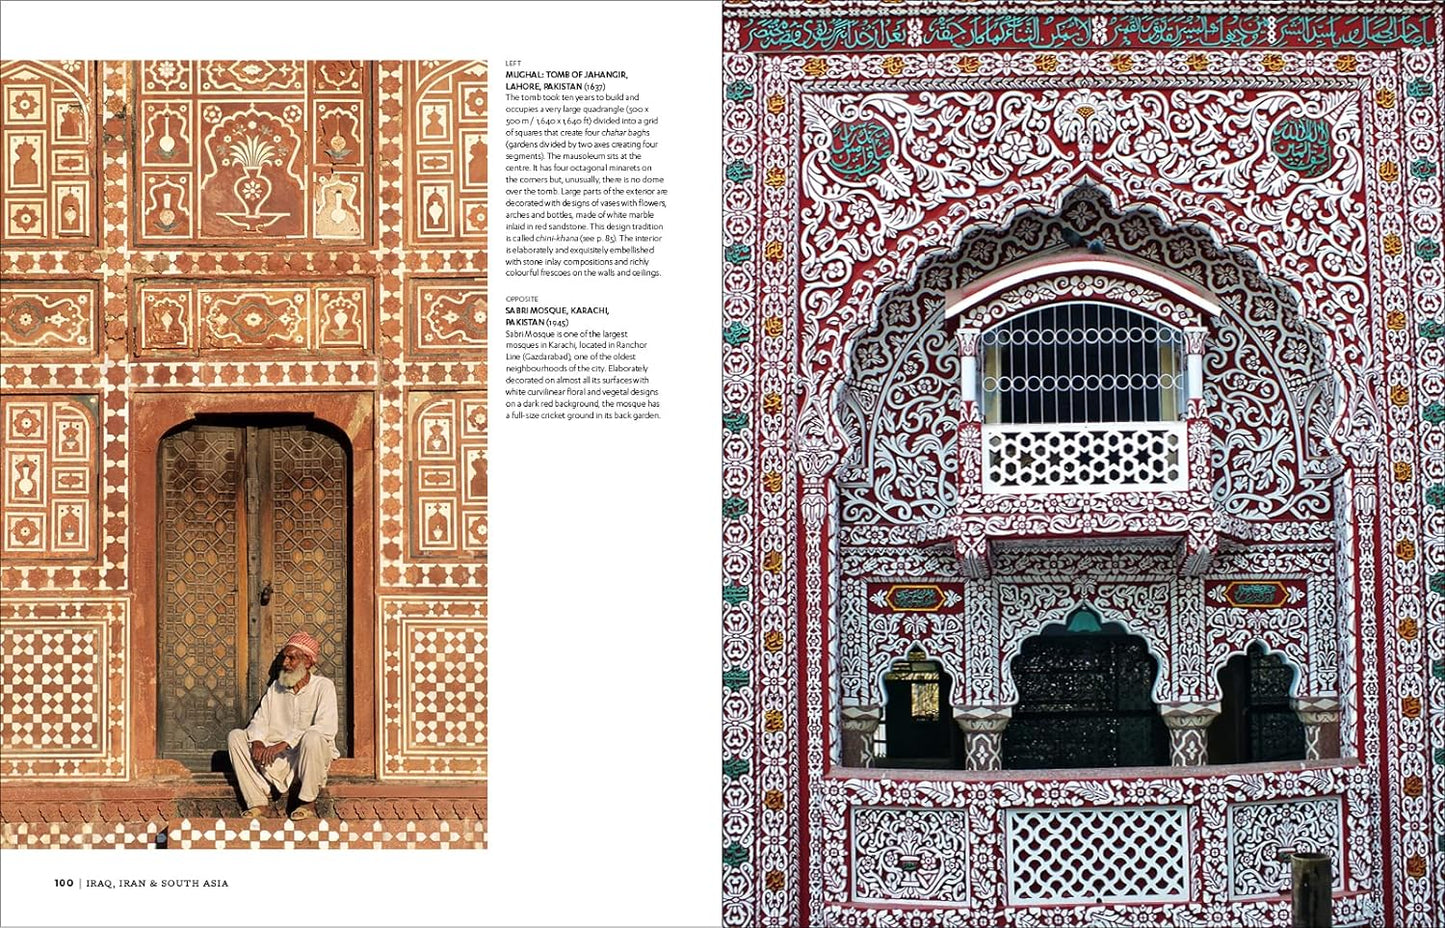 Islamic Architecture: A World History